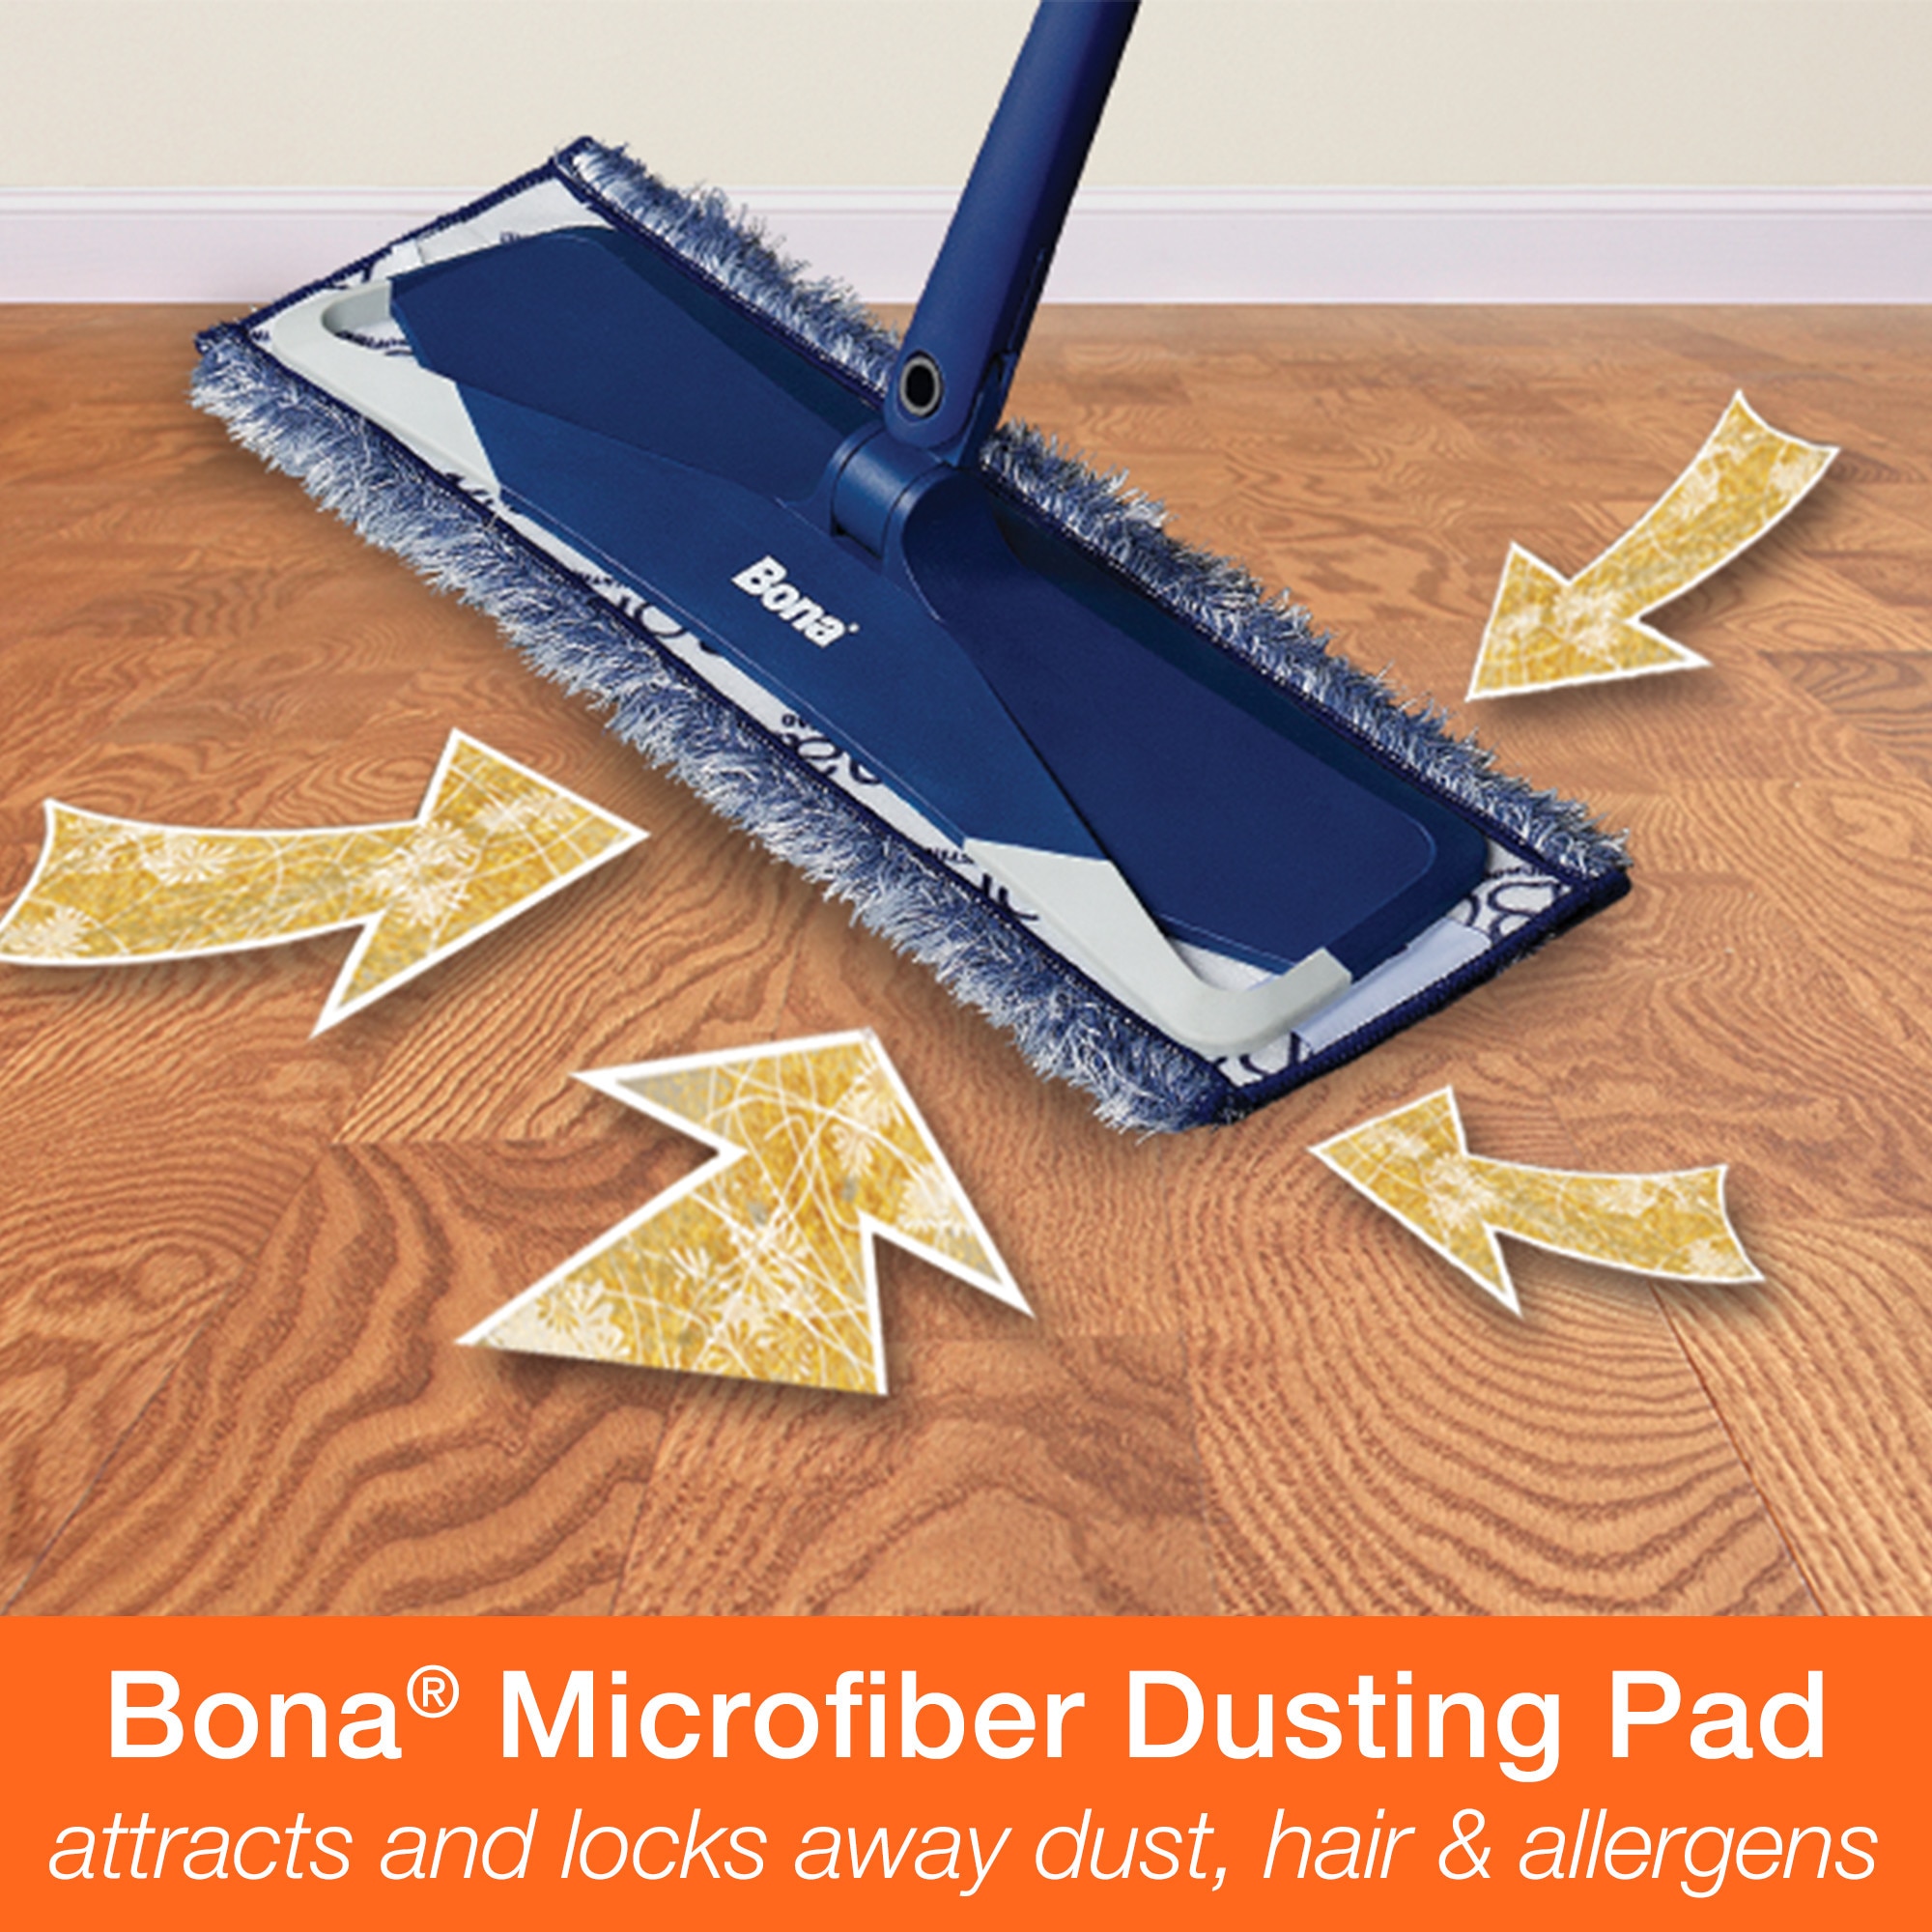 Bona Mop Dry Disposable Dusting Cloths Dirt Pet Hair Hardwood Tile Floor 10-pack 